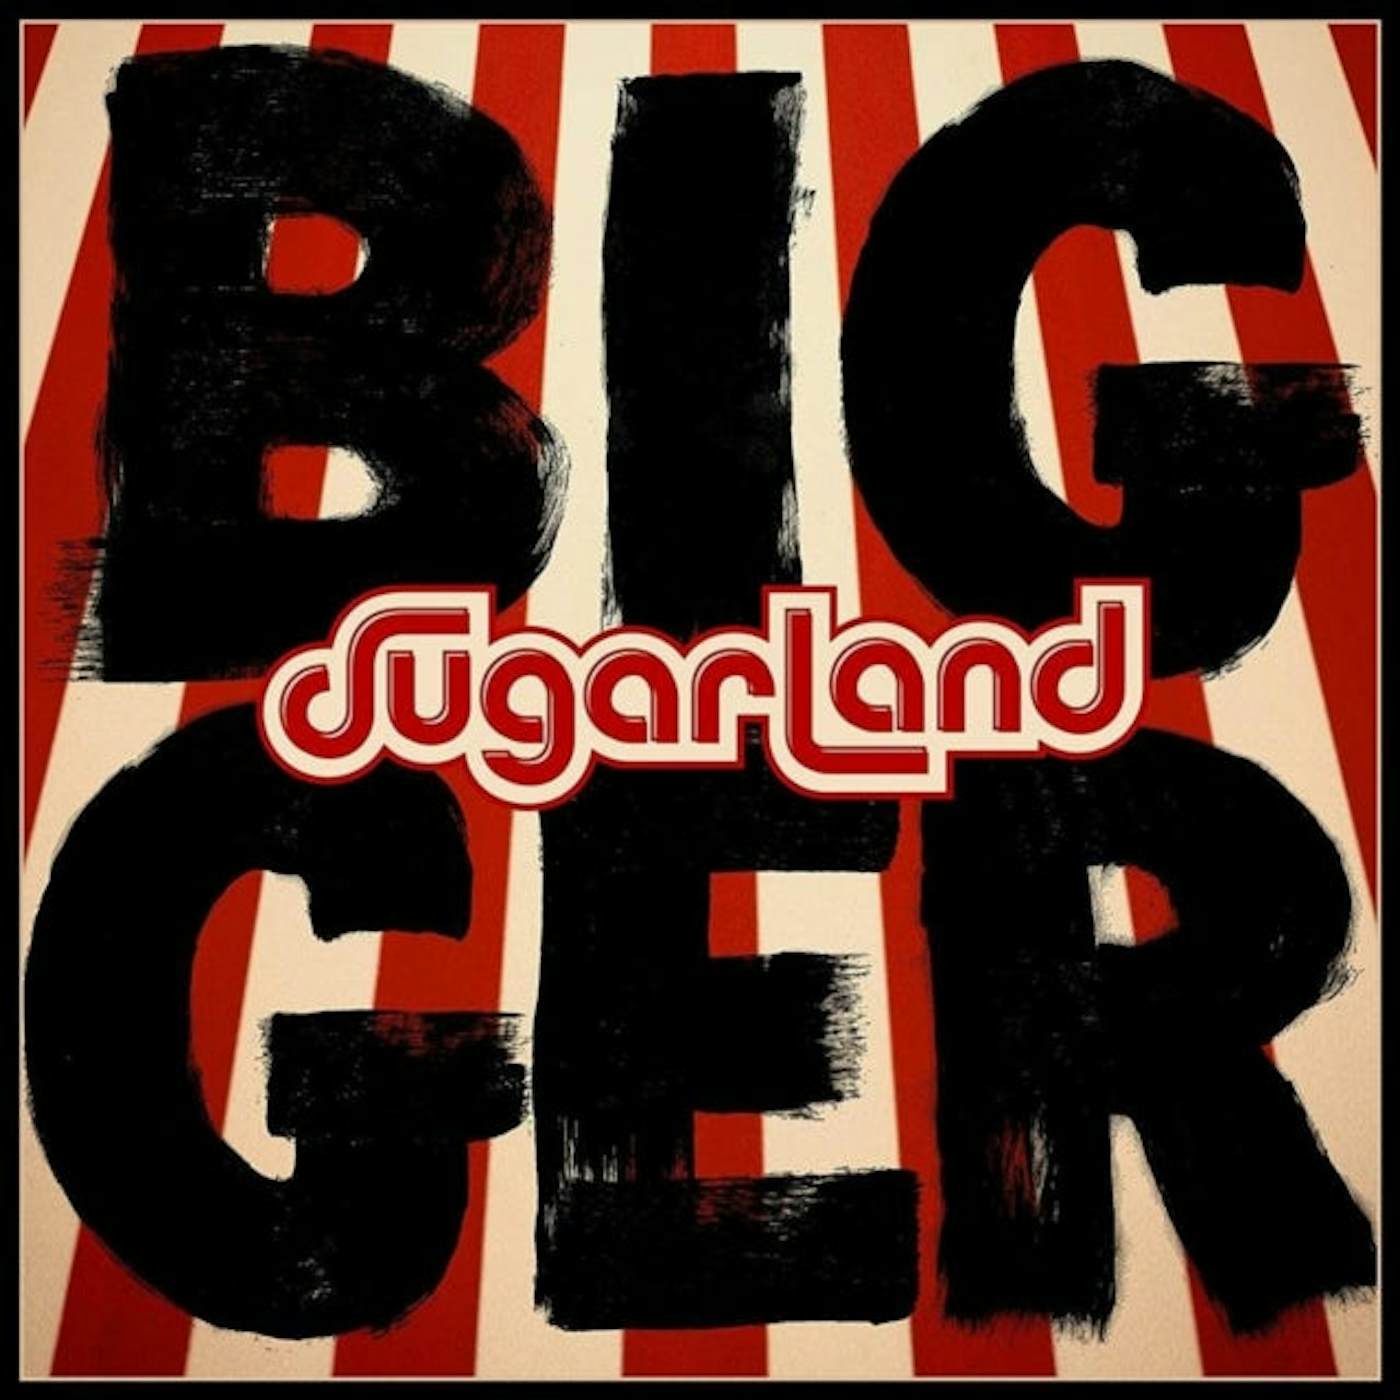 Sugarland LP Vinyl Record - Bigger